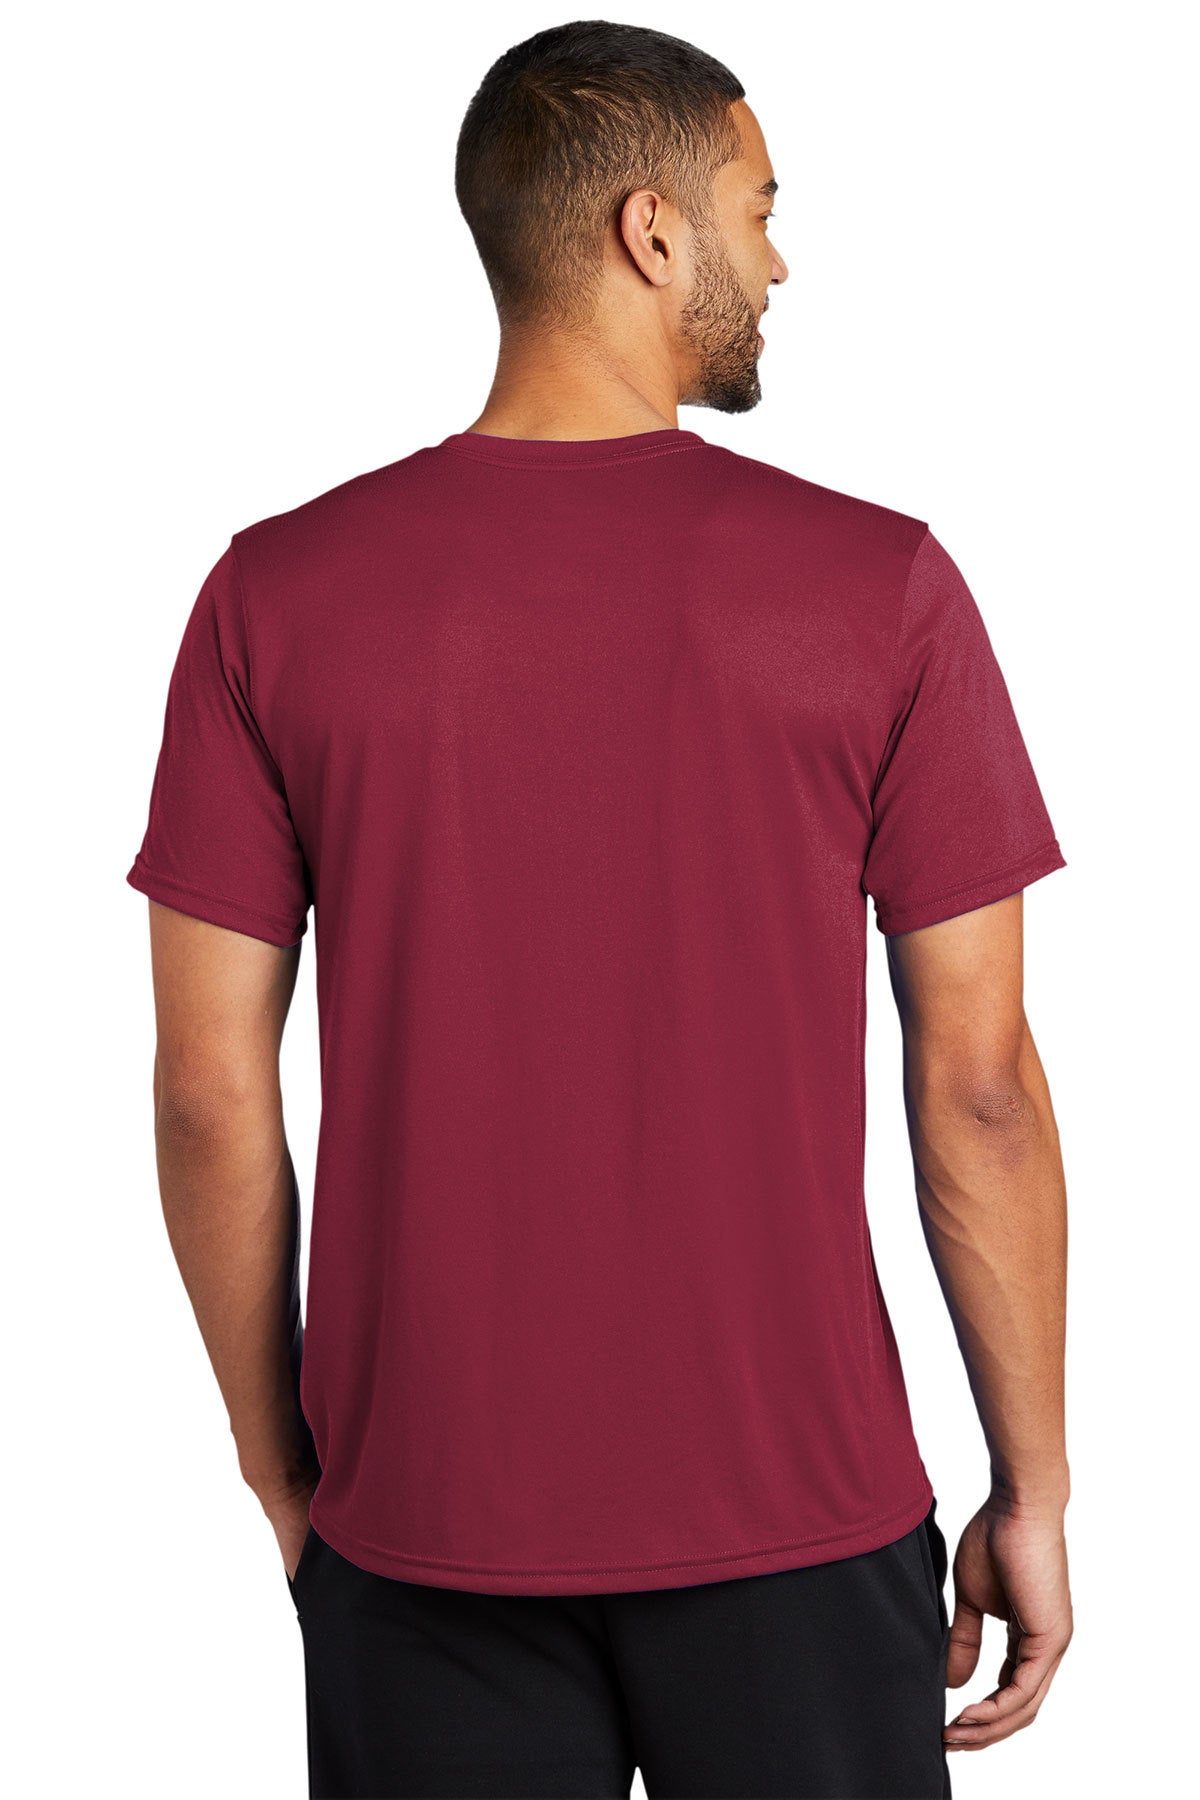 Nike Legend Customized T-Shirts, Team Maroon